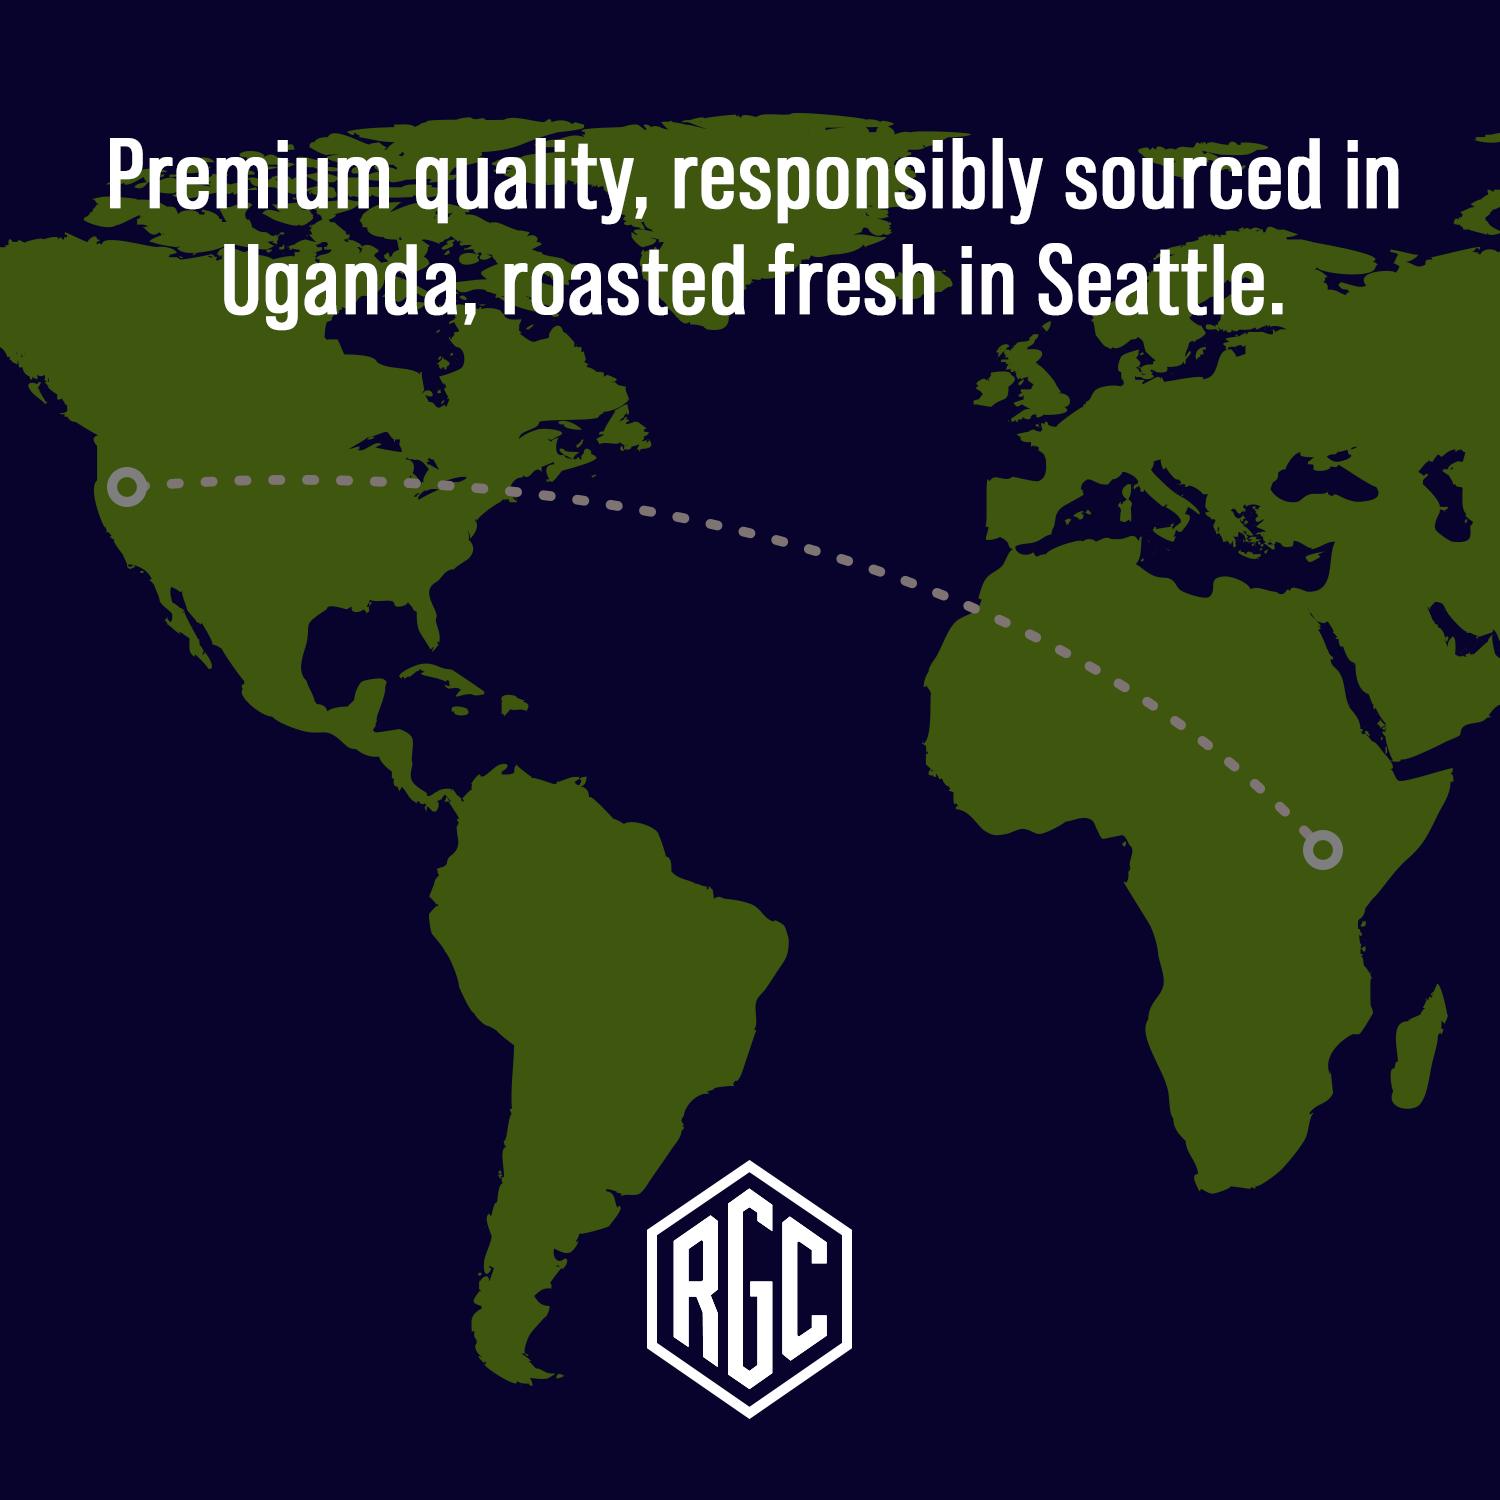 Fair Trade Single Origin: Uganda Medium Roast Whole Bean Coffee 2 LB